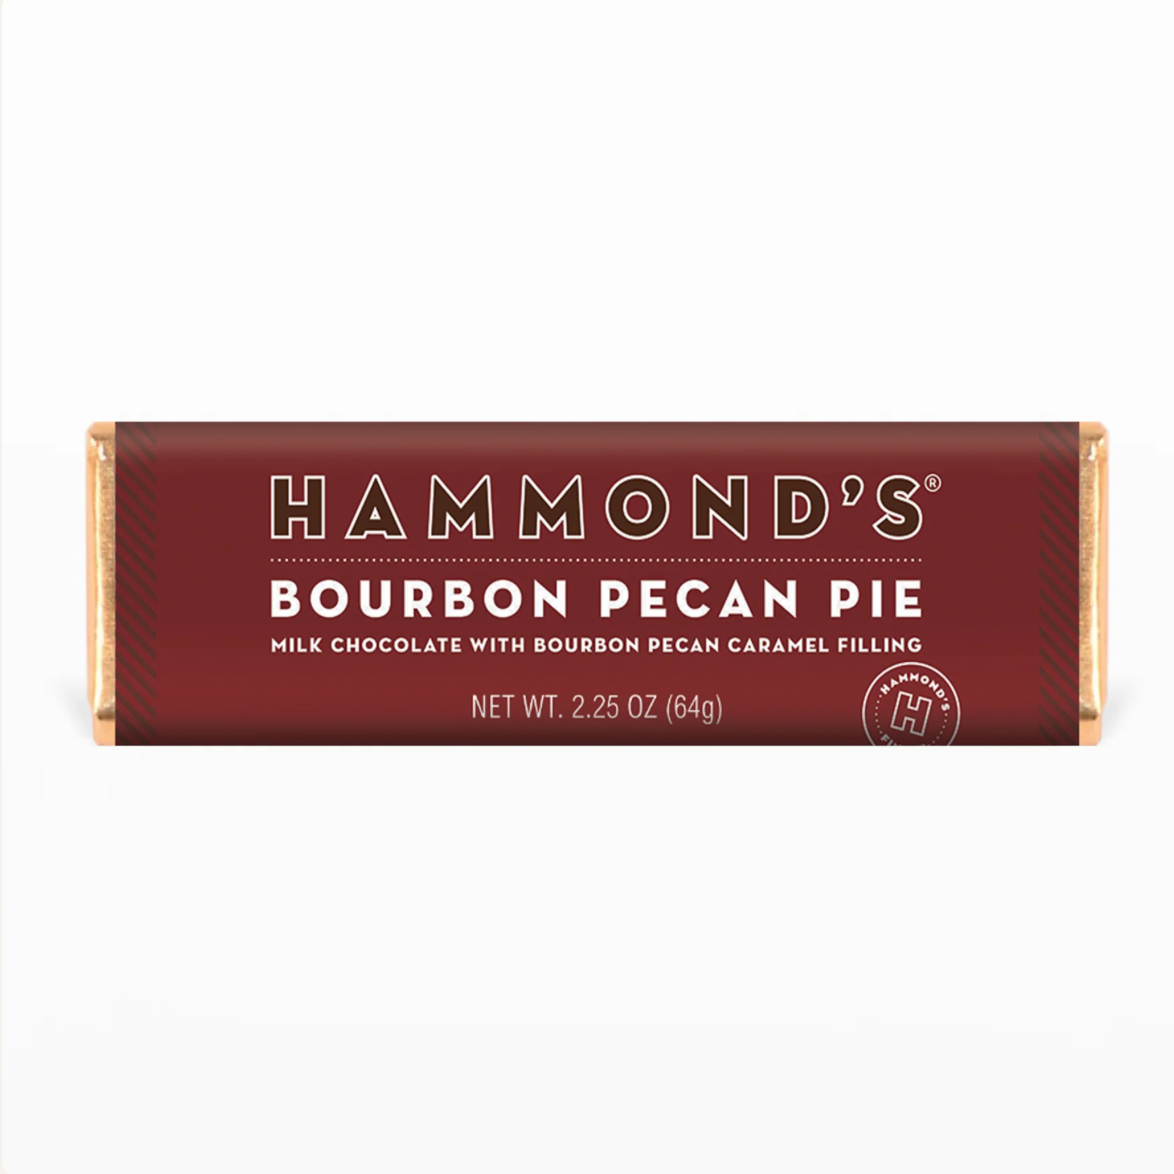 Hammond's Bourbon Pecan Pie